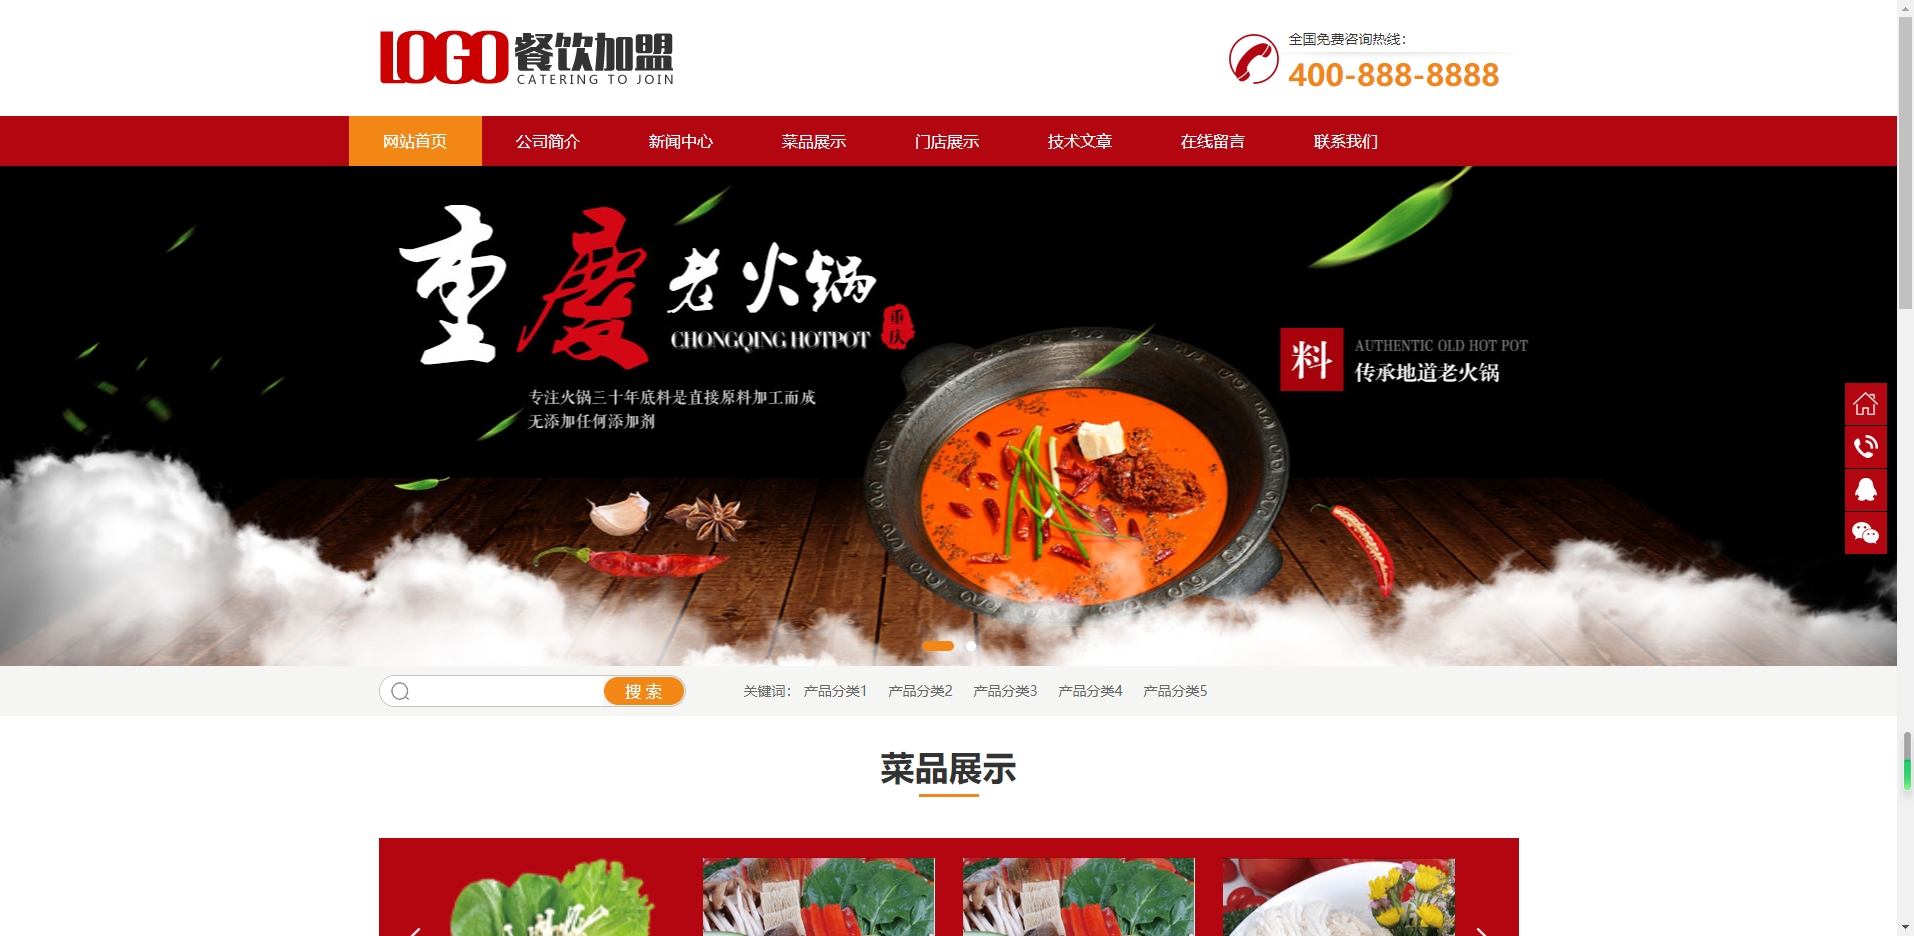 (PC+WAP)红色火锅加盟网站pbootcms模板 餐饮美食网站源码下载gj308